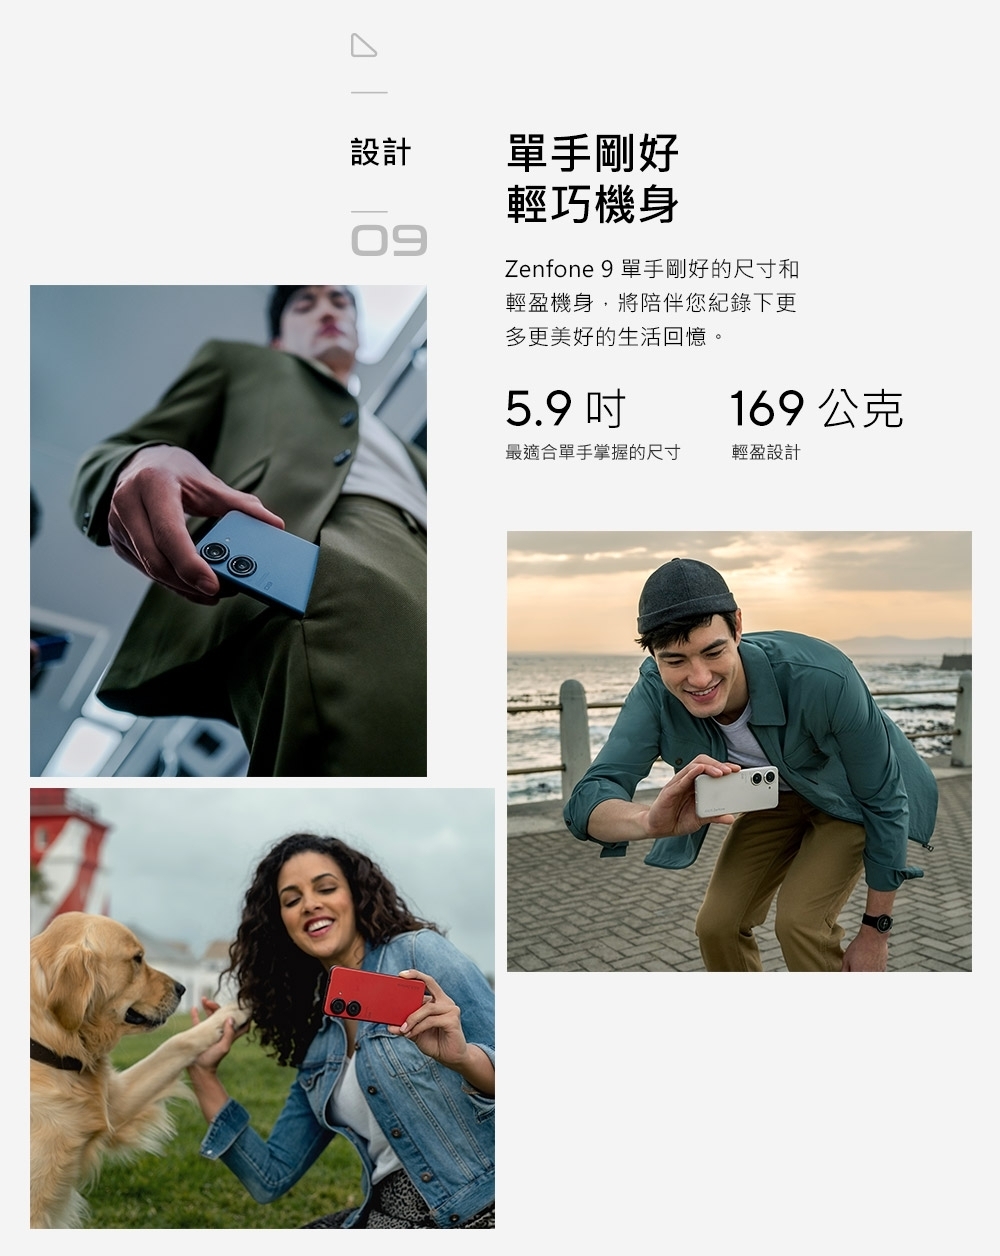 【ASUS 華碩】Zenfone 9 (8G+256G) 5.9吋智慧型手機